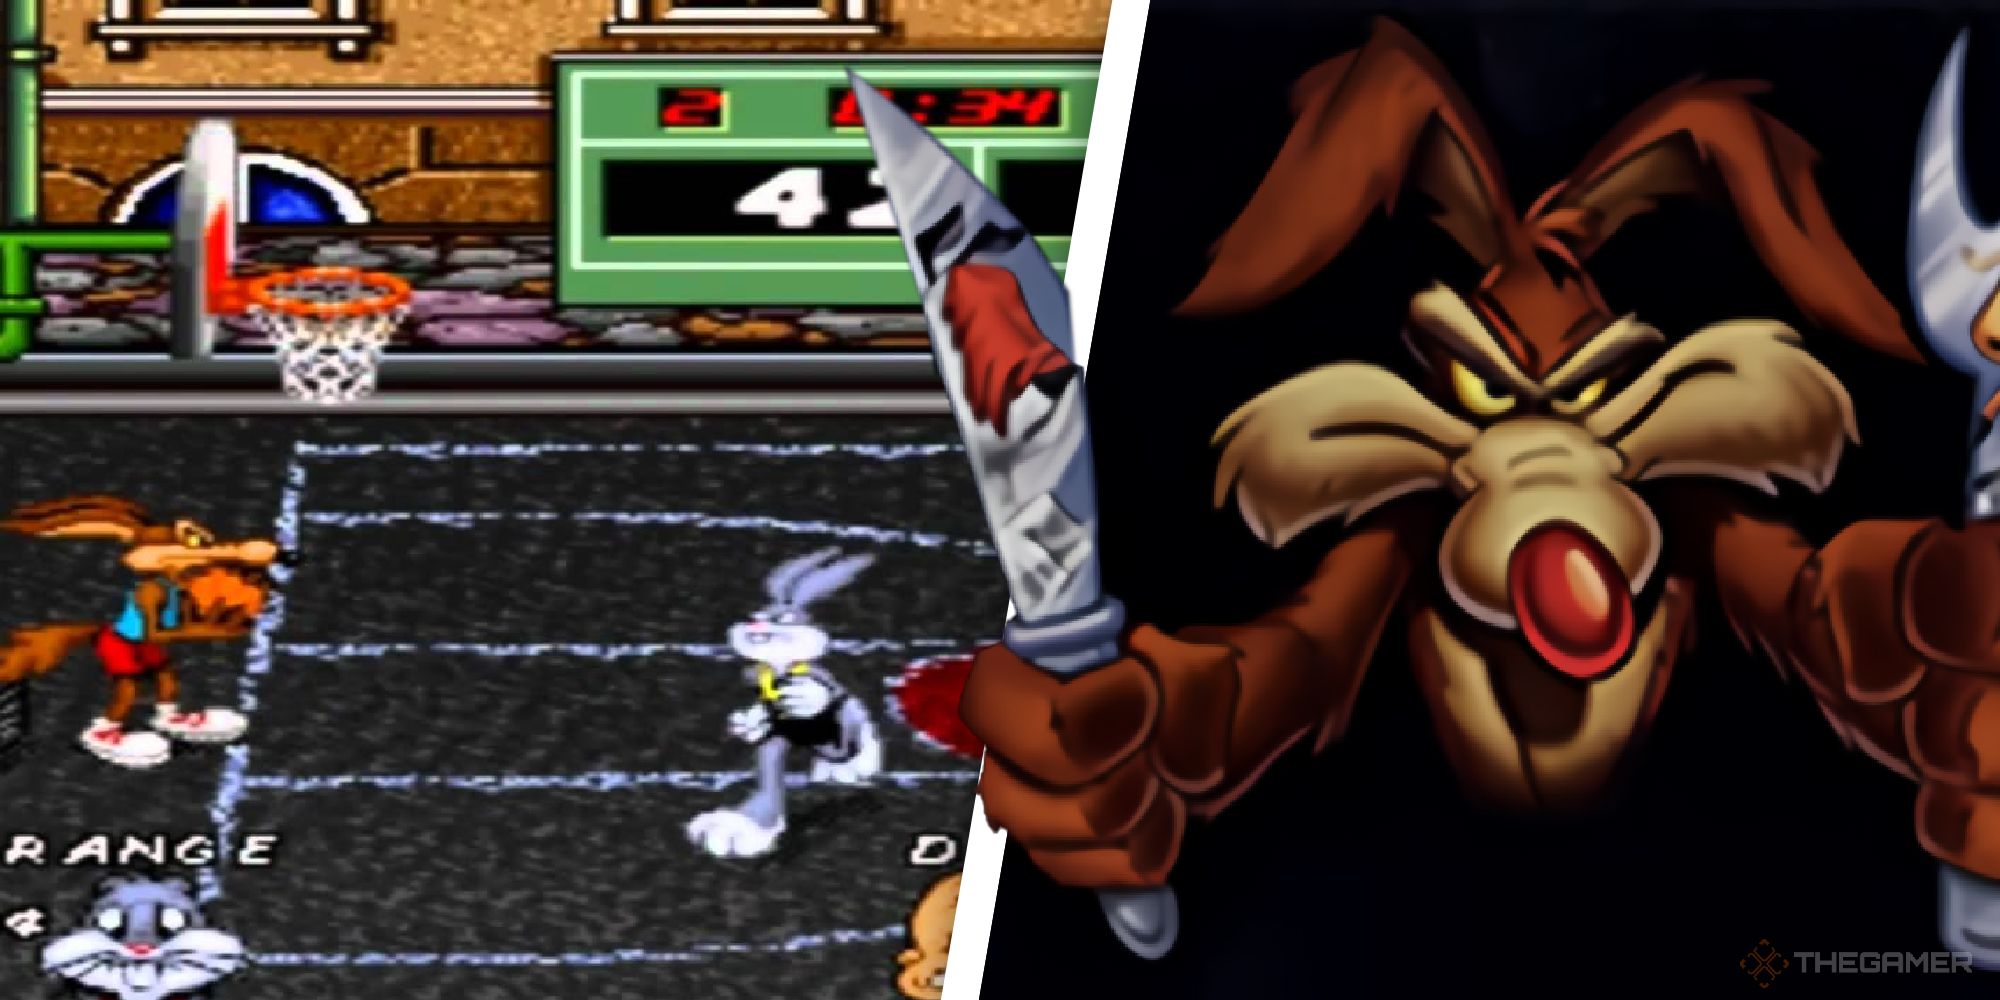 Looney Tunes games split image